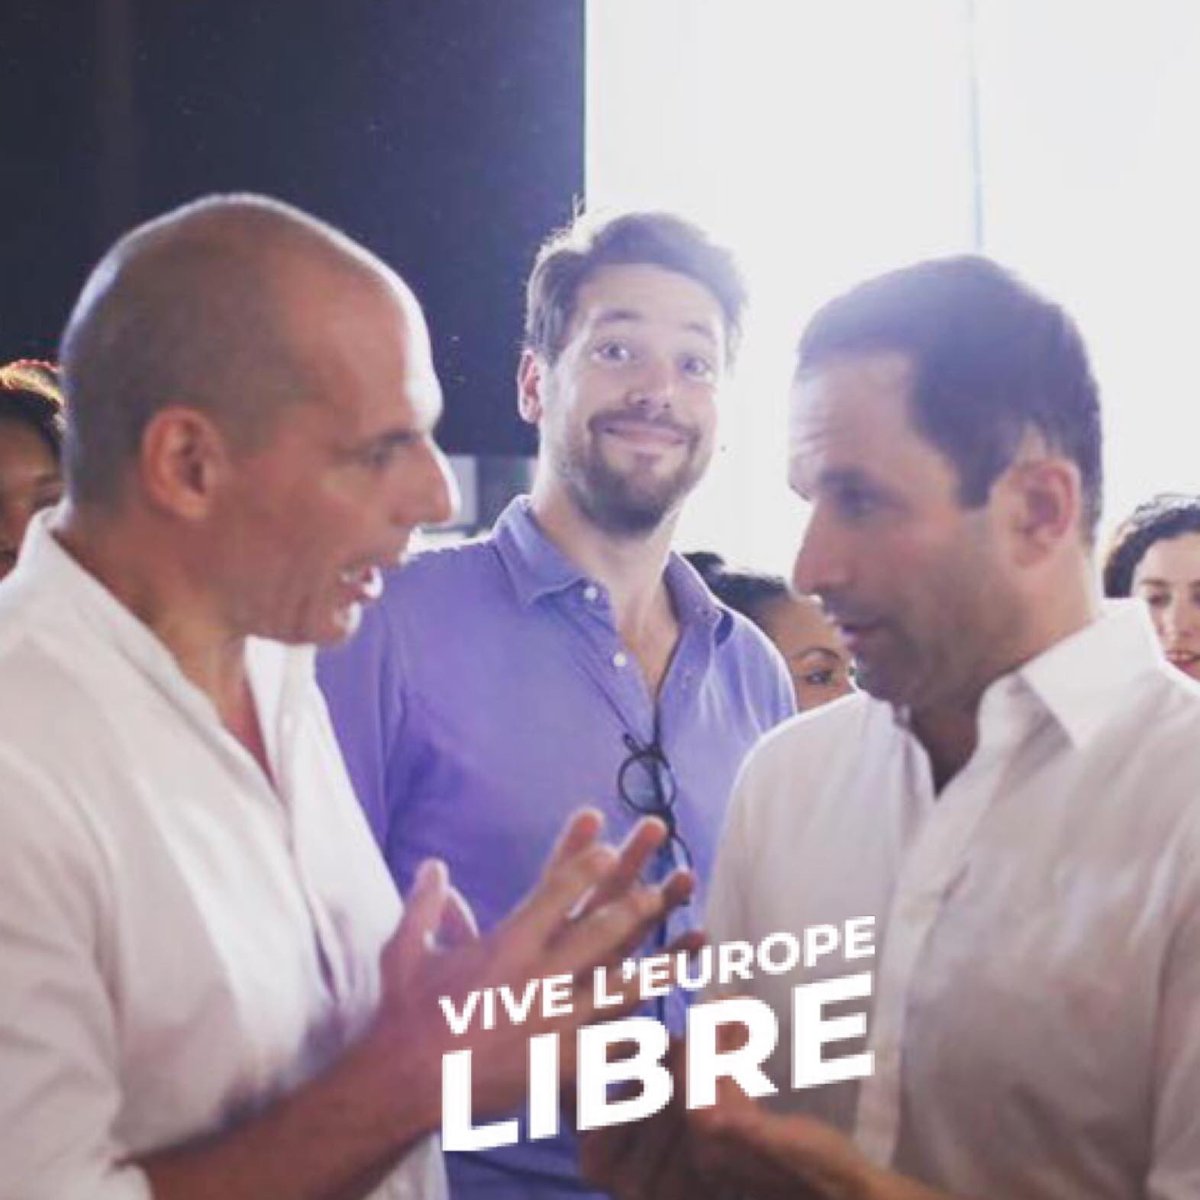 #VivelEuropeLibre avec @benoithamon, @yanisvaroufakis et @Isabel_thomasEU  !#PrintempsEuropéen @GenerationsMvt @DiEM25_FR